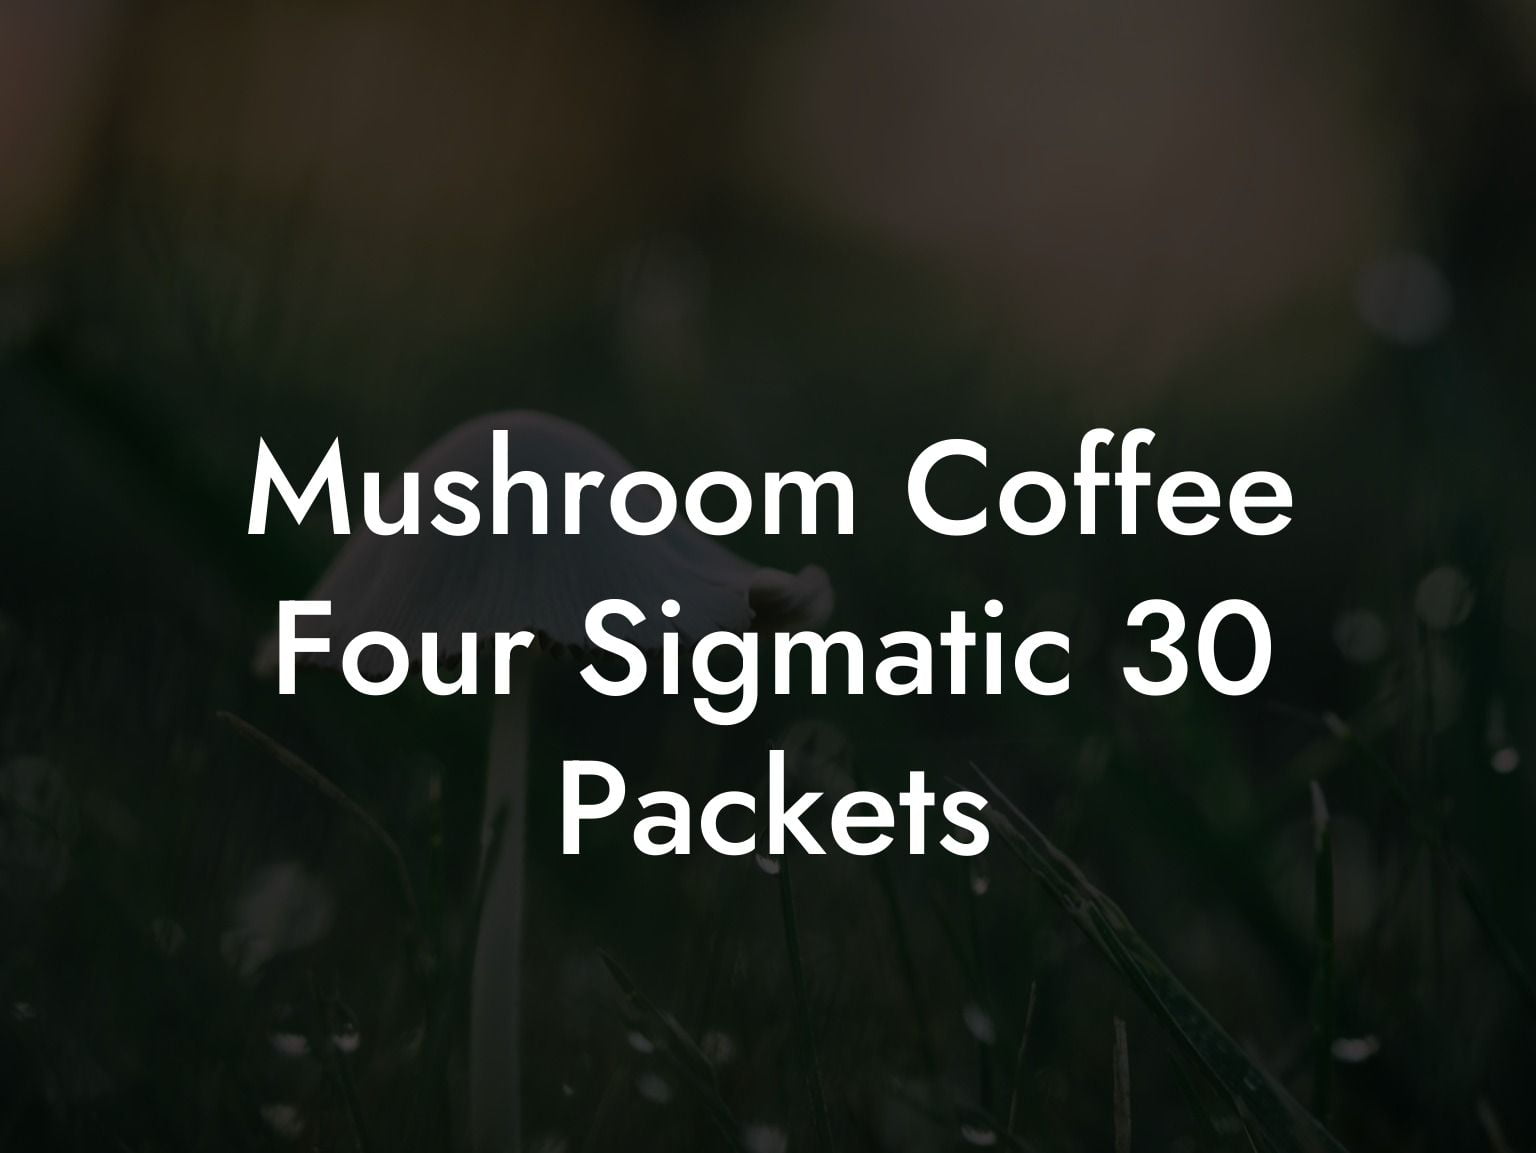 Mushroom Coffee Four Sigmatic 30 Packets